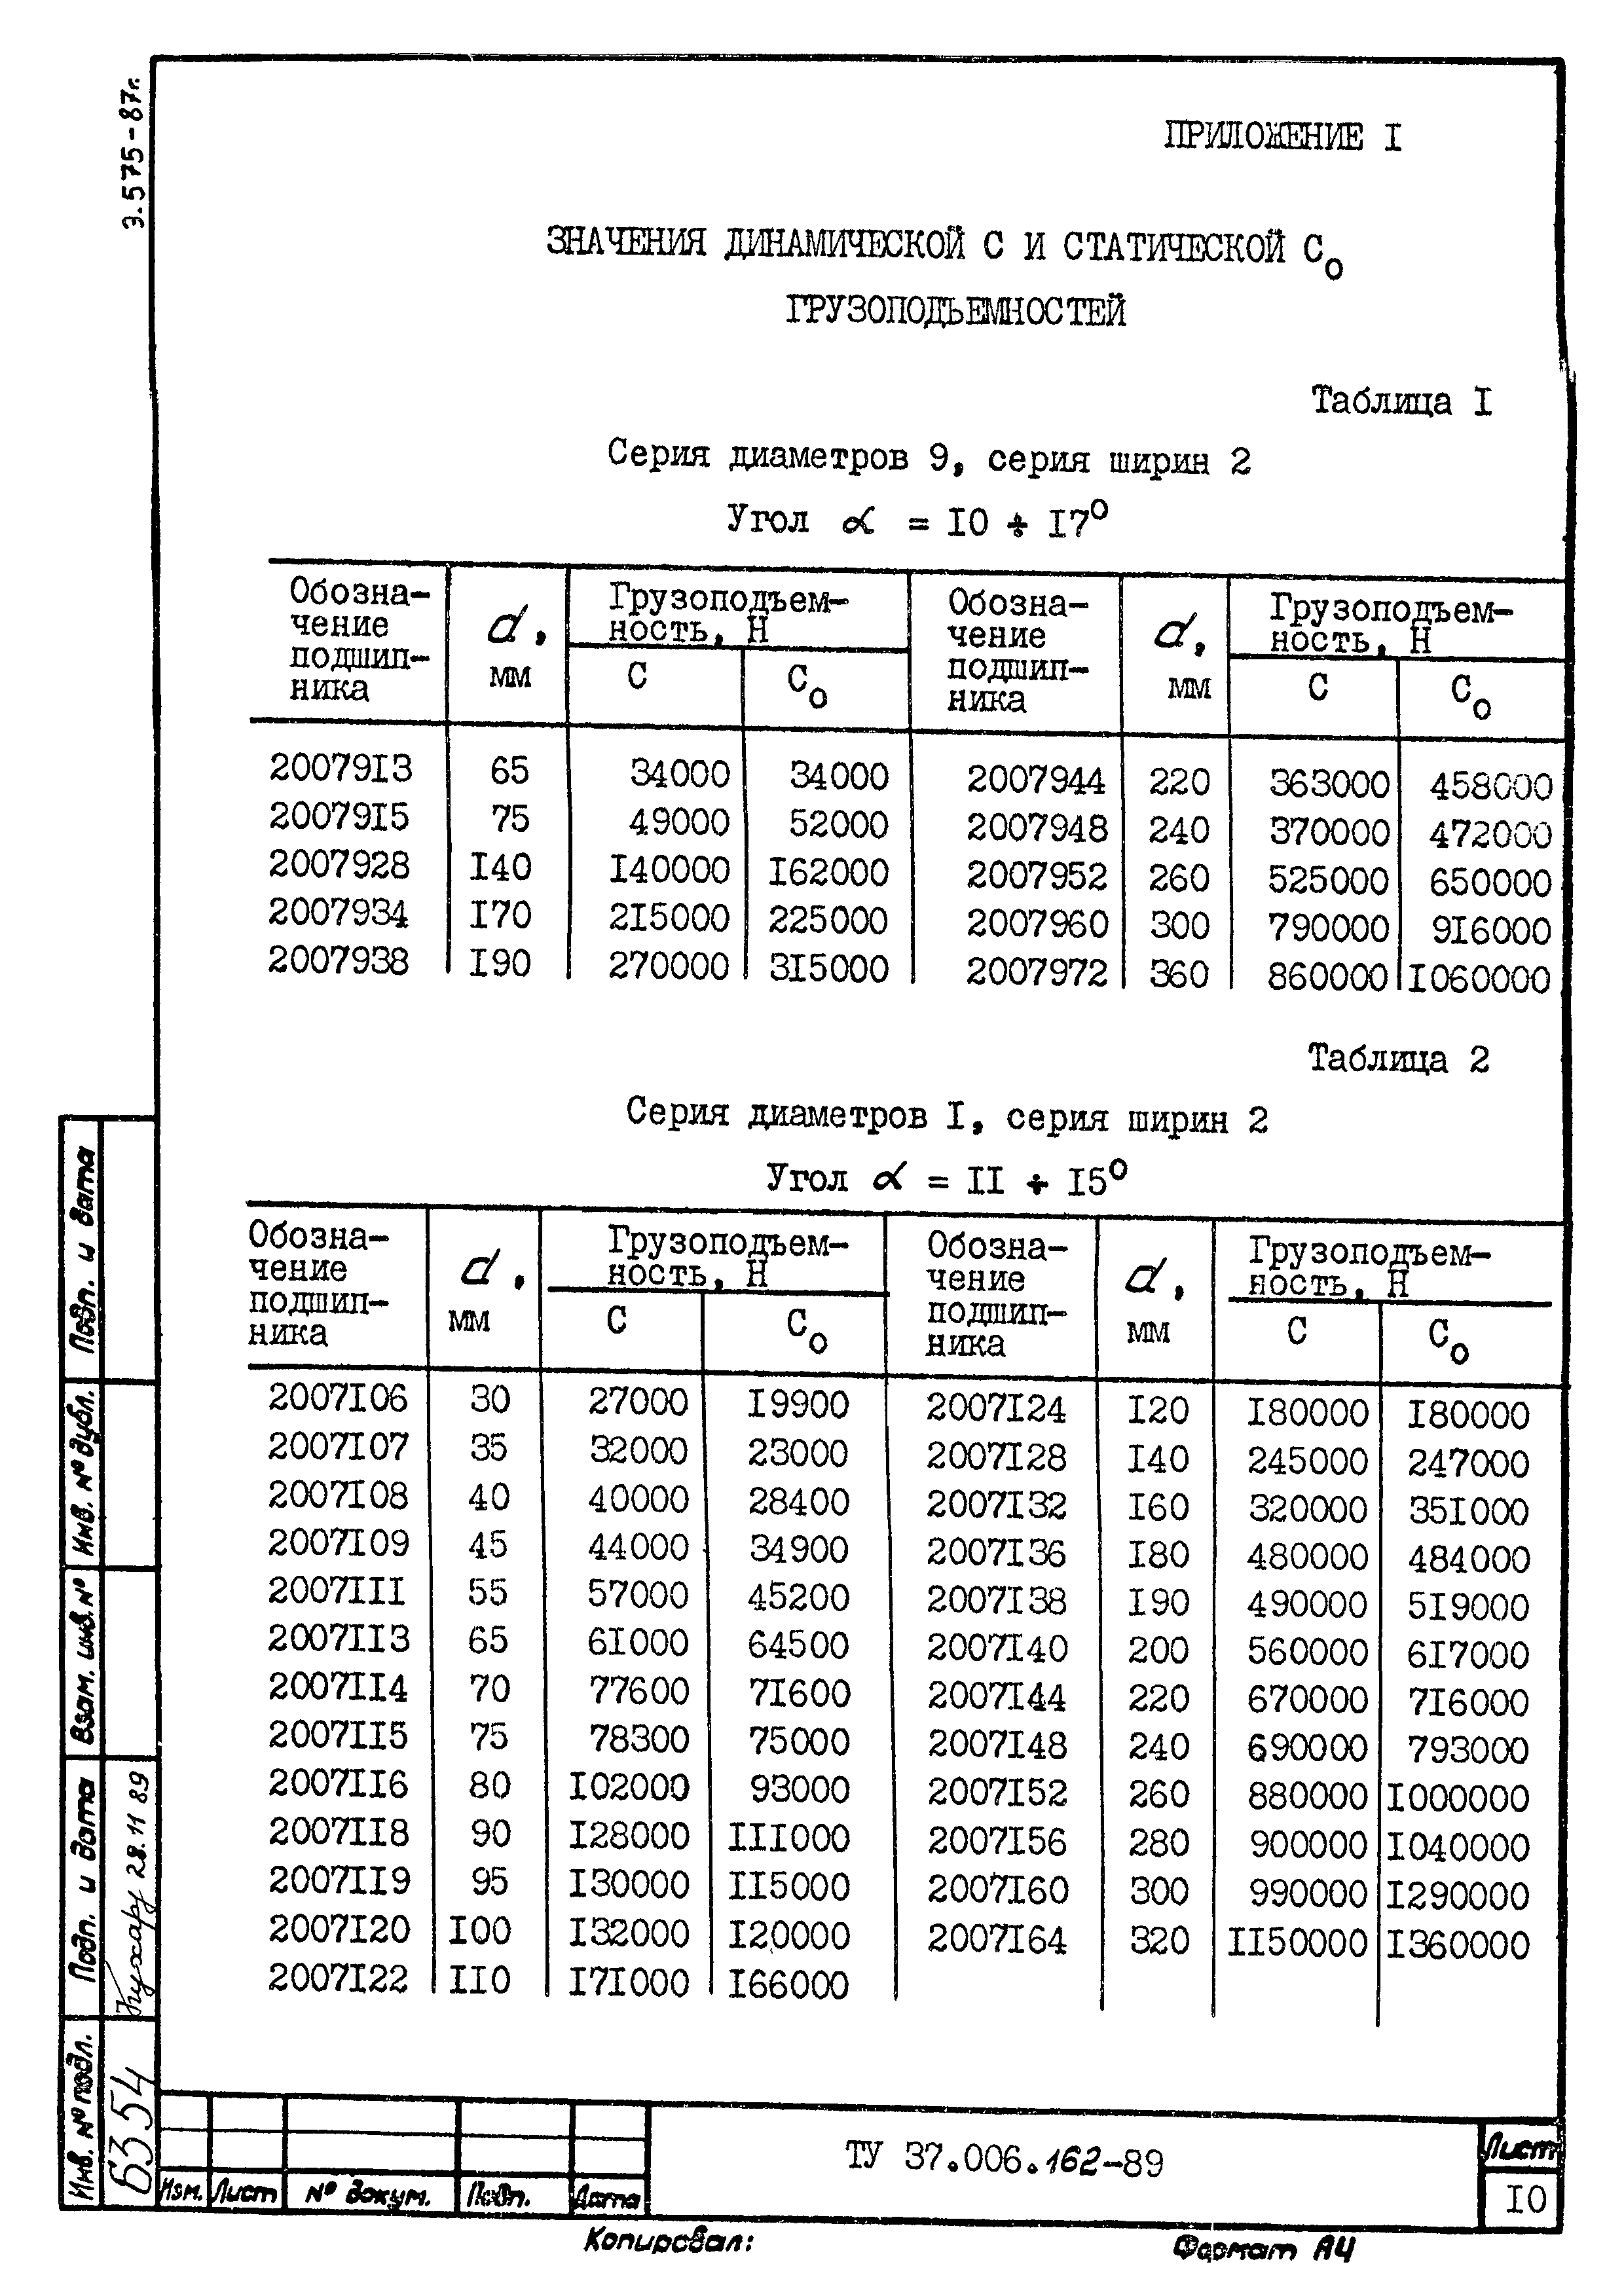 ТУ 37.006.162-89